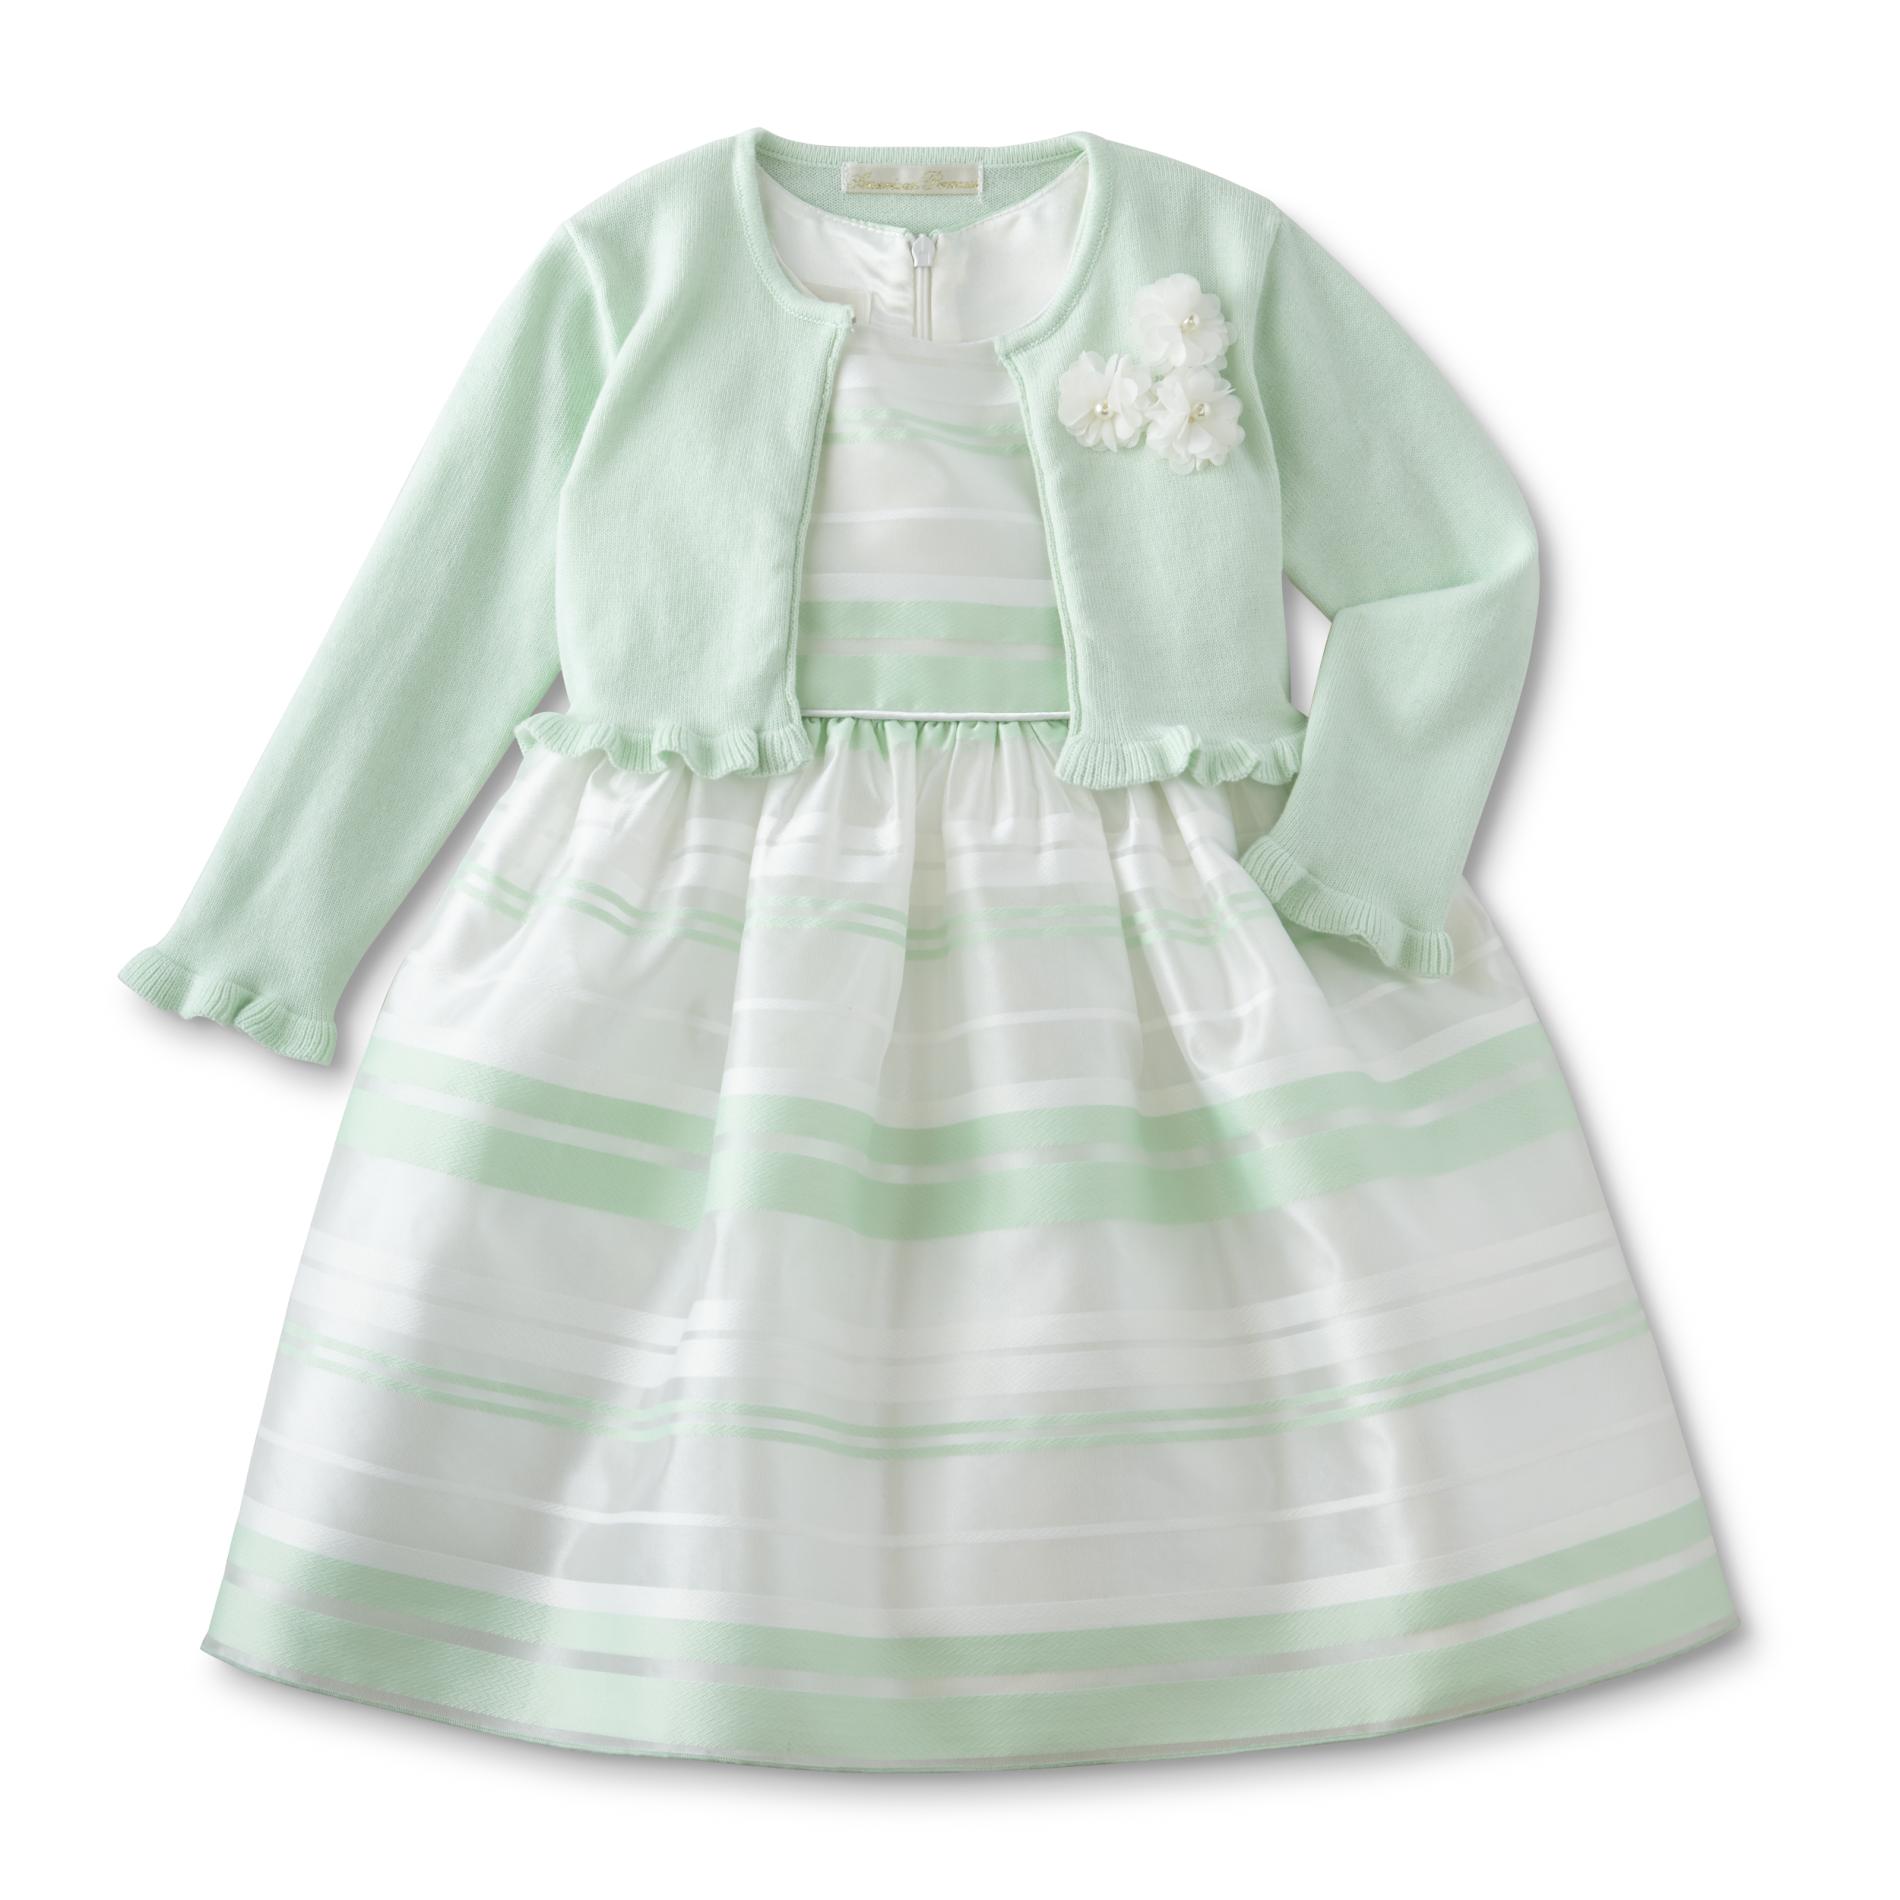 American Princess Infant Girls' Occasion Dress & Shrug - Striped